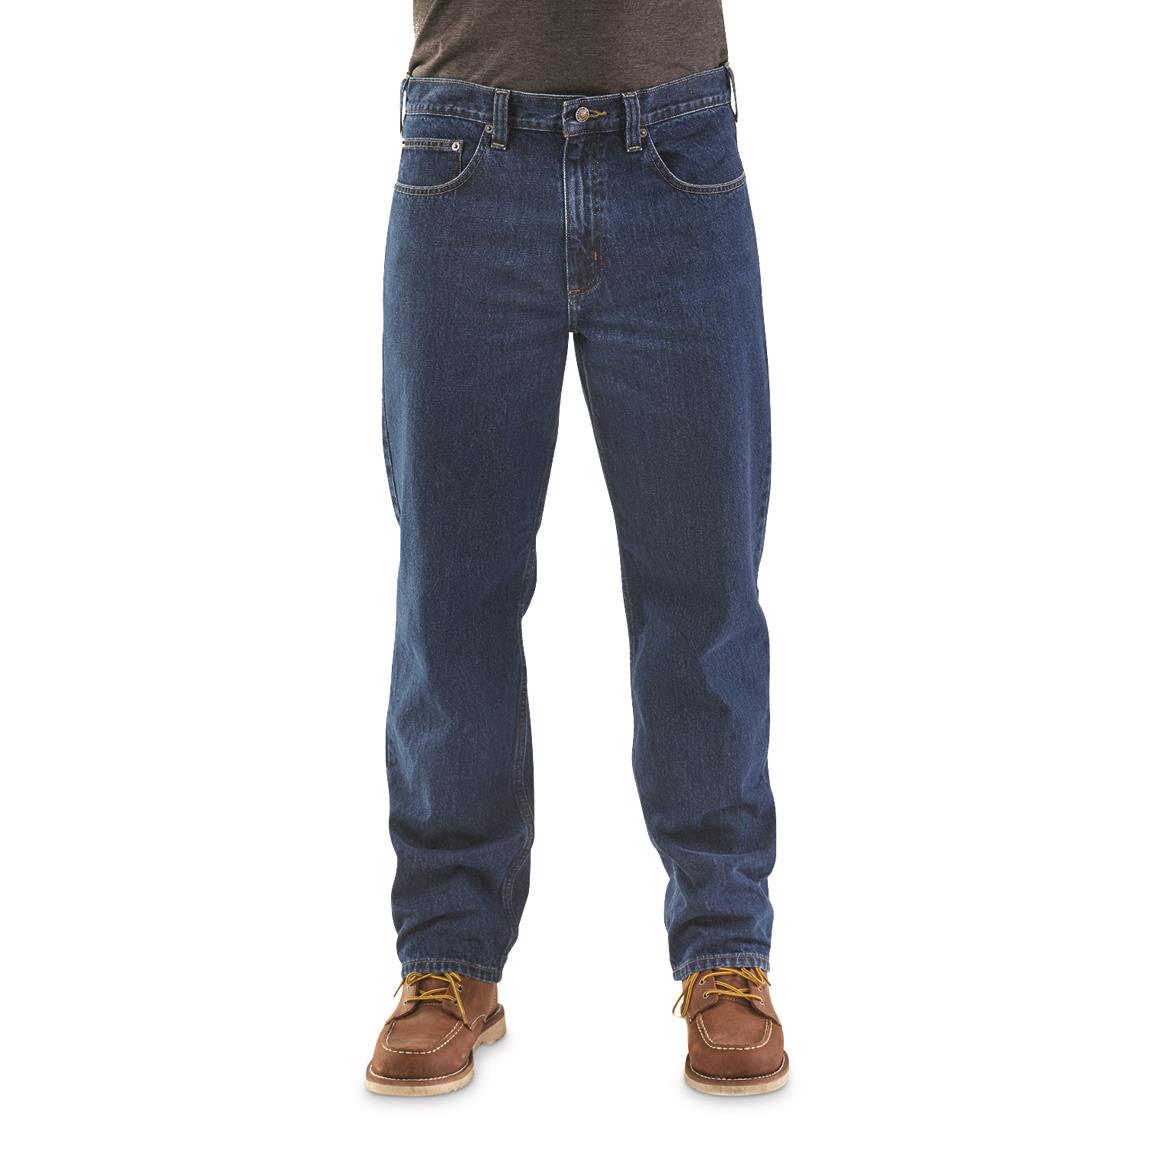 Guide Gear Men's Sportsman's Jeans, Medium Stonewash